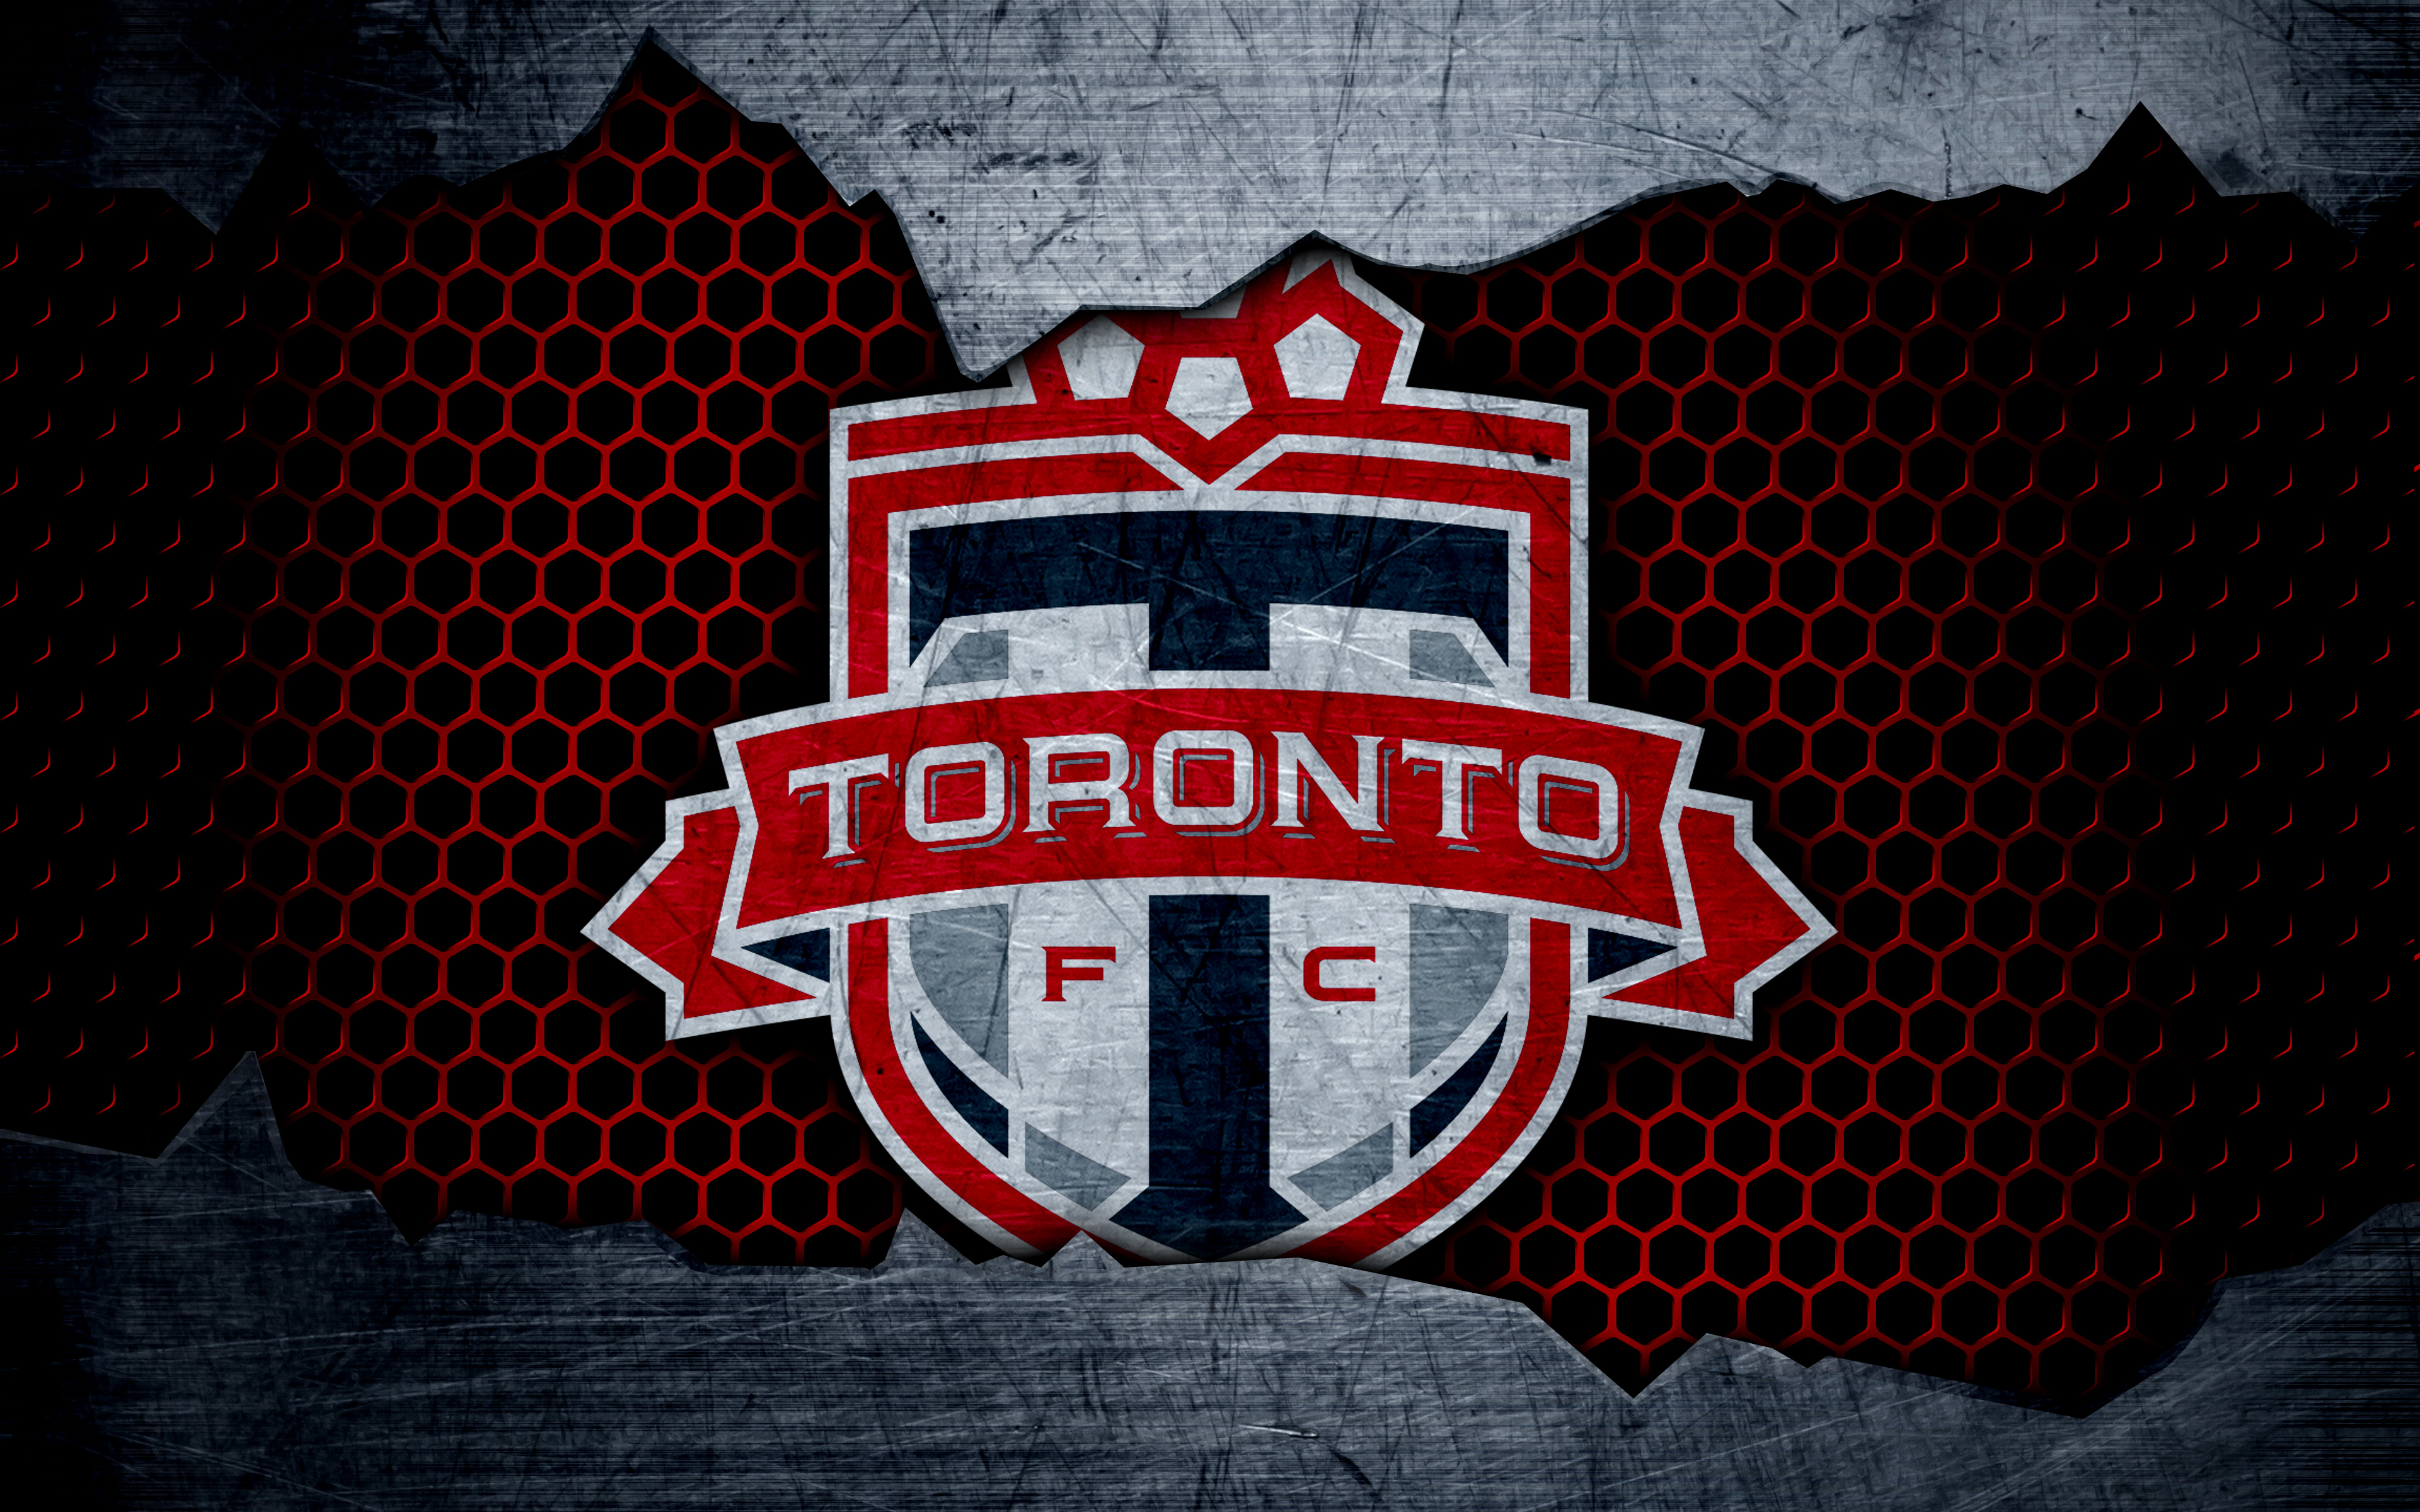 Toronto Fc 4k Ultra HD Wallpaper Background Image